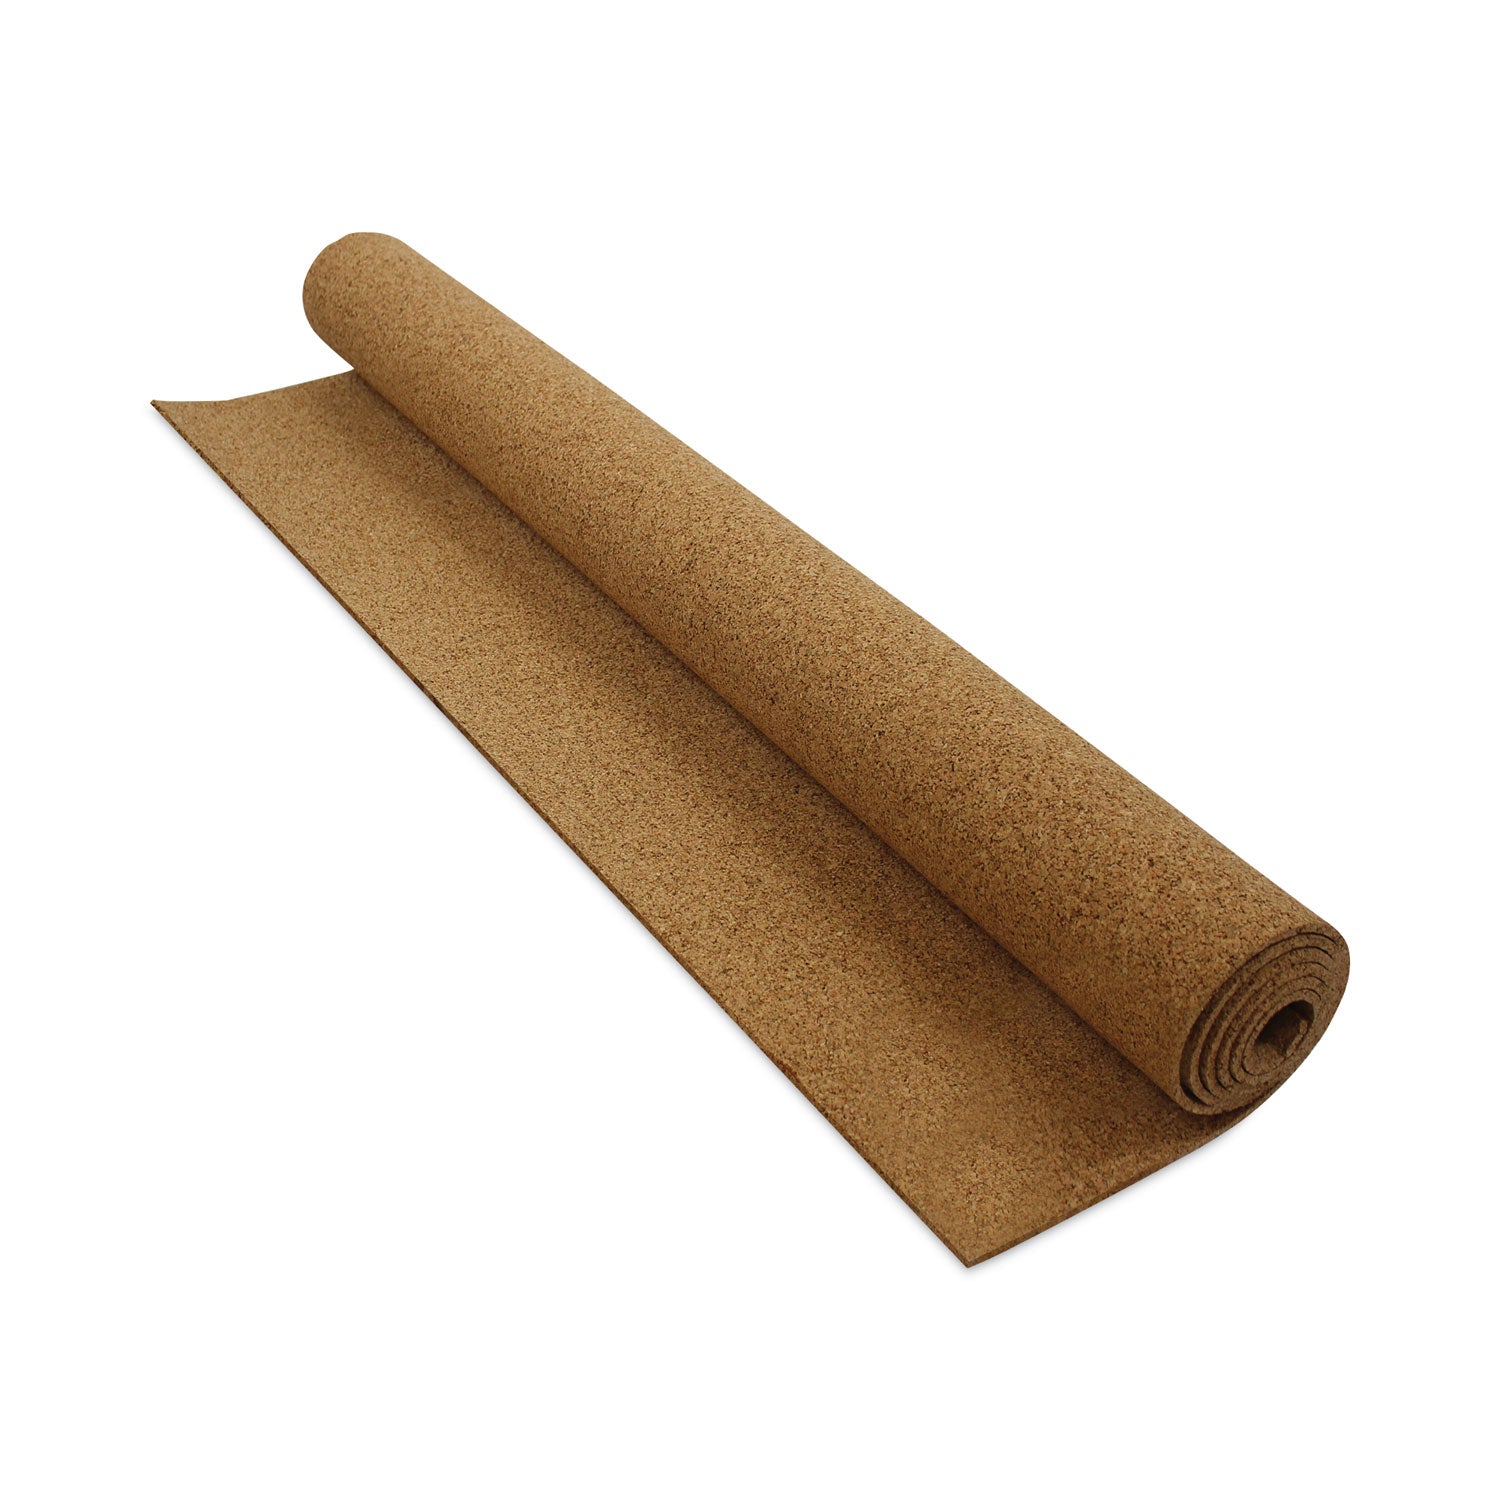 cork-roll-96-x-48-024-thick-brown-surface_flp38006 - 1